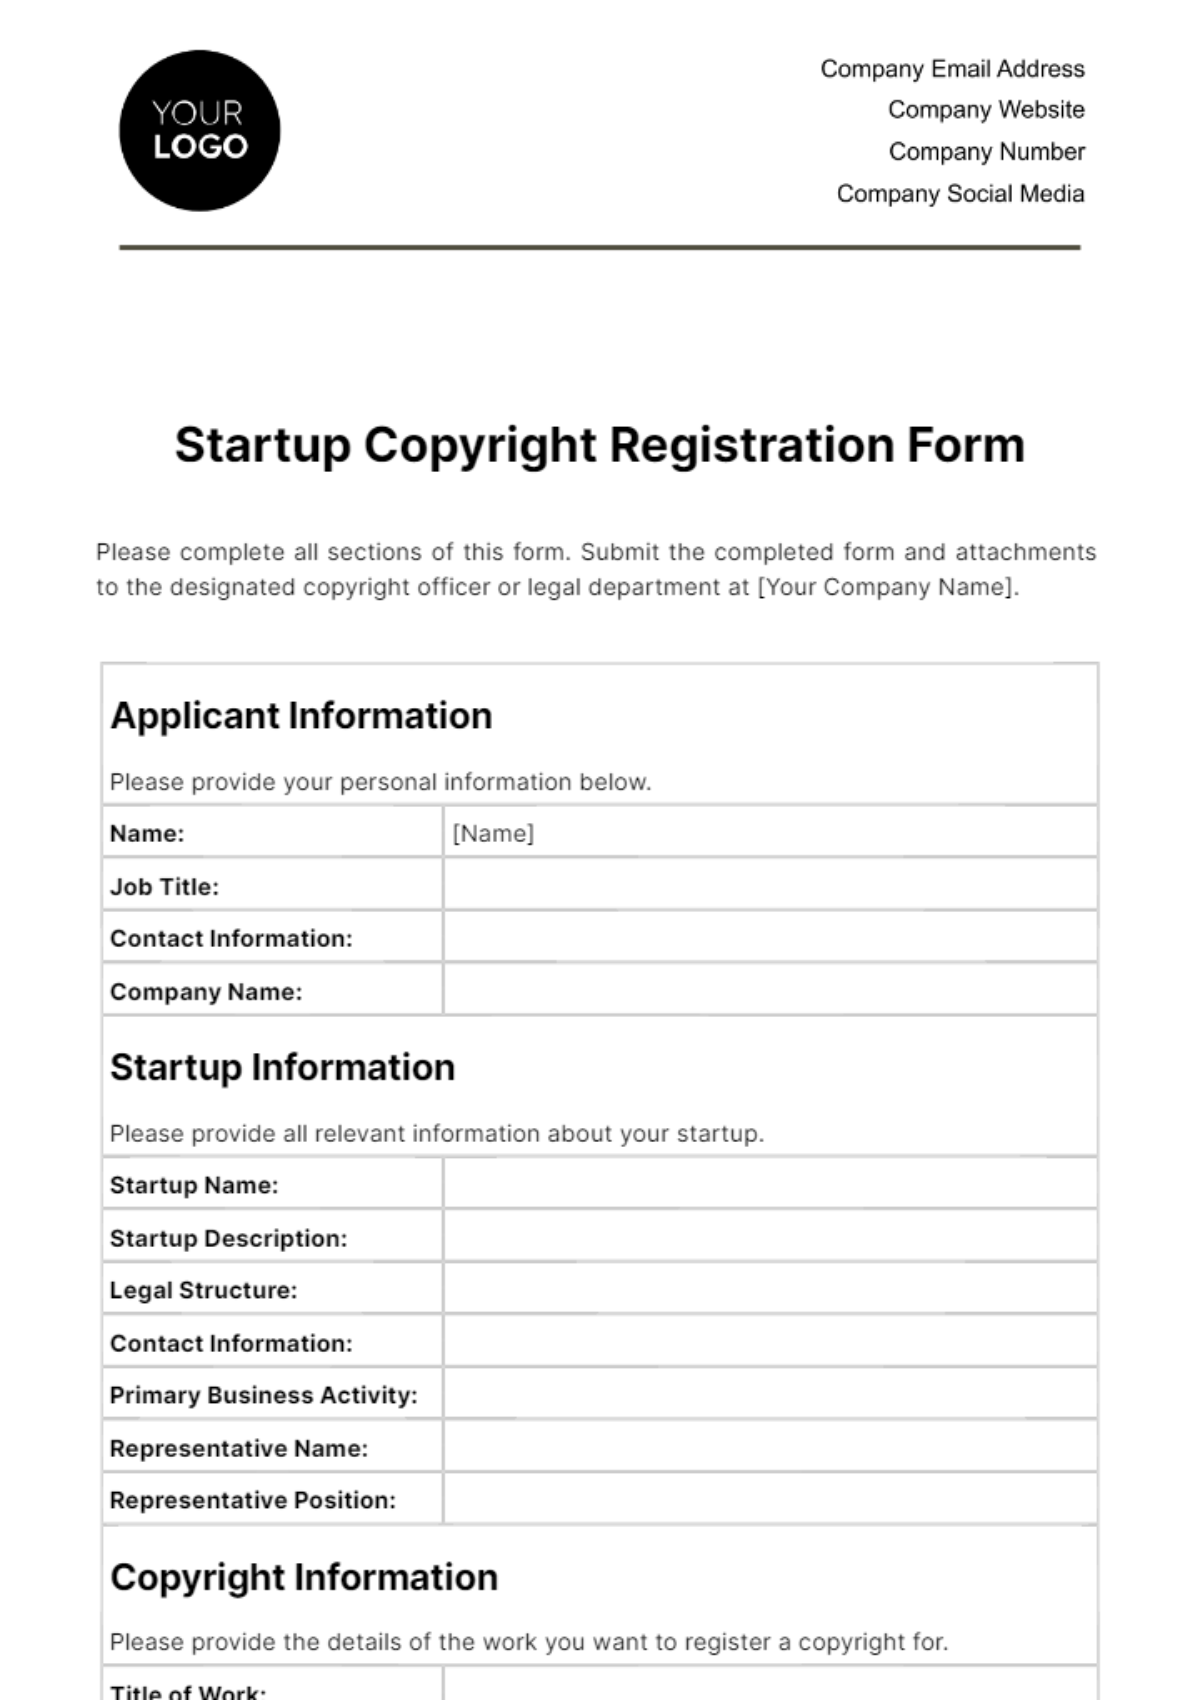 Startup Copyright Registration Form Template